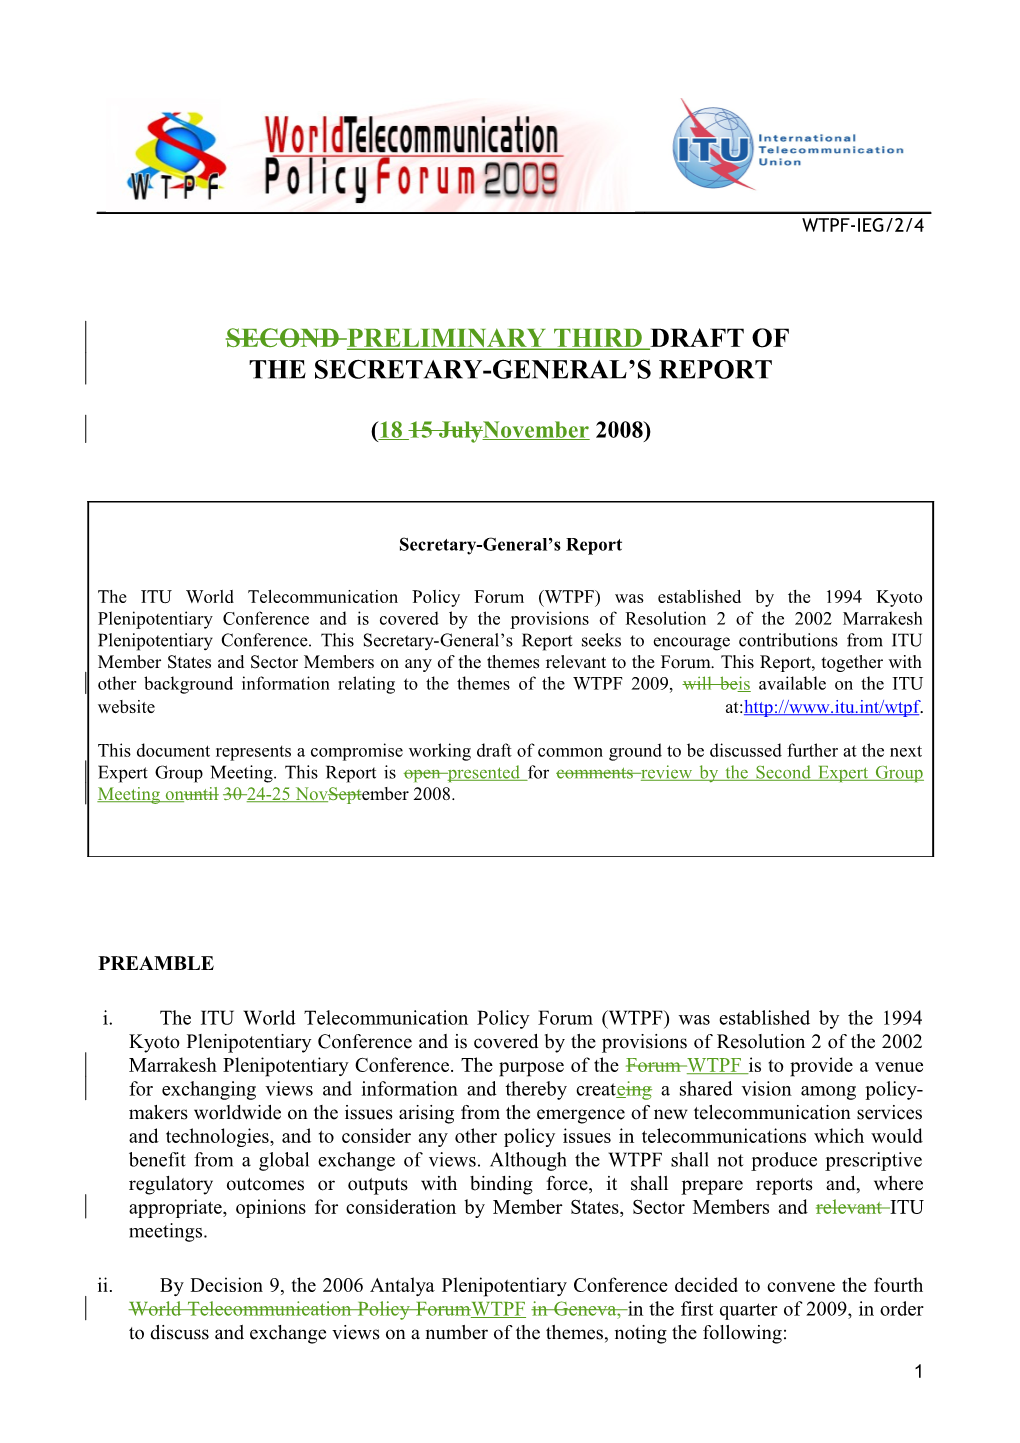 WTPF 2009 Secretary General's Report s1